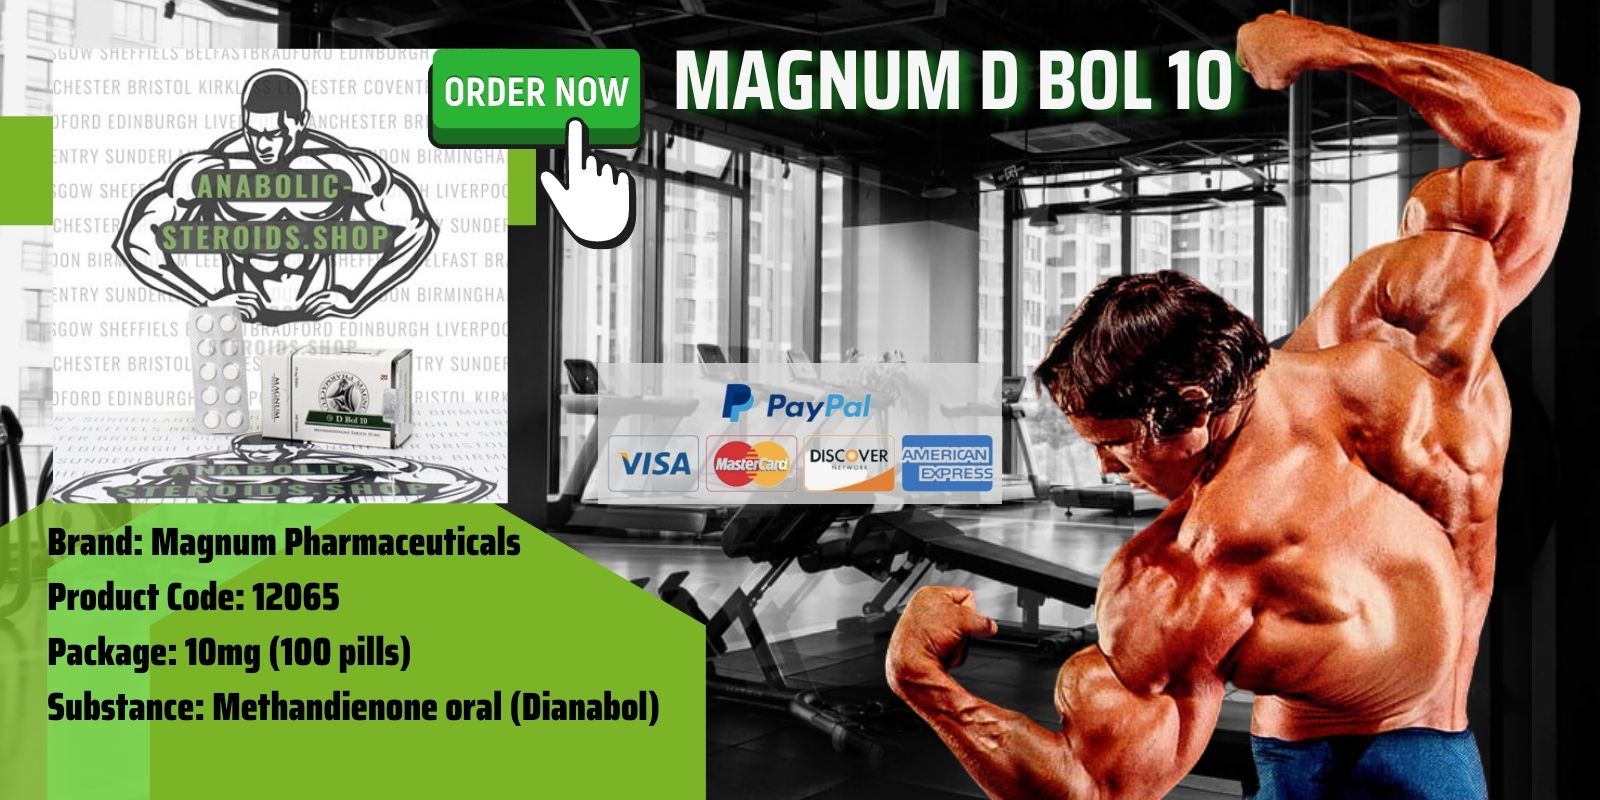 anabolic-steroids.shop - MAGNUM D BOL 10